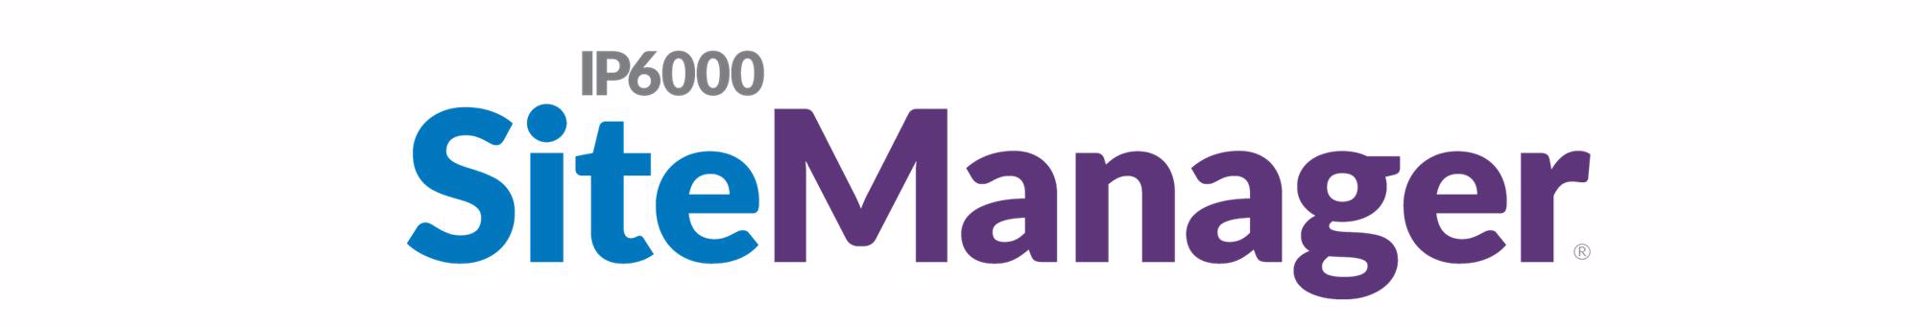 IP6000 SiteManager Logo